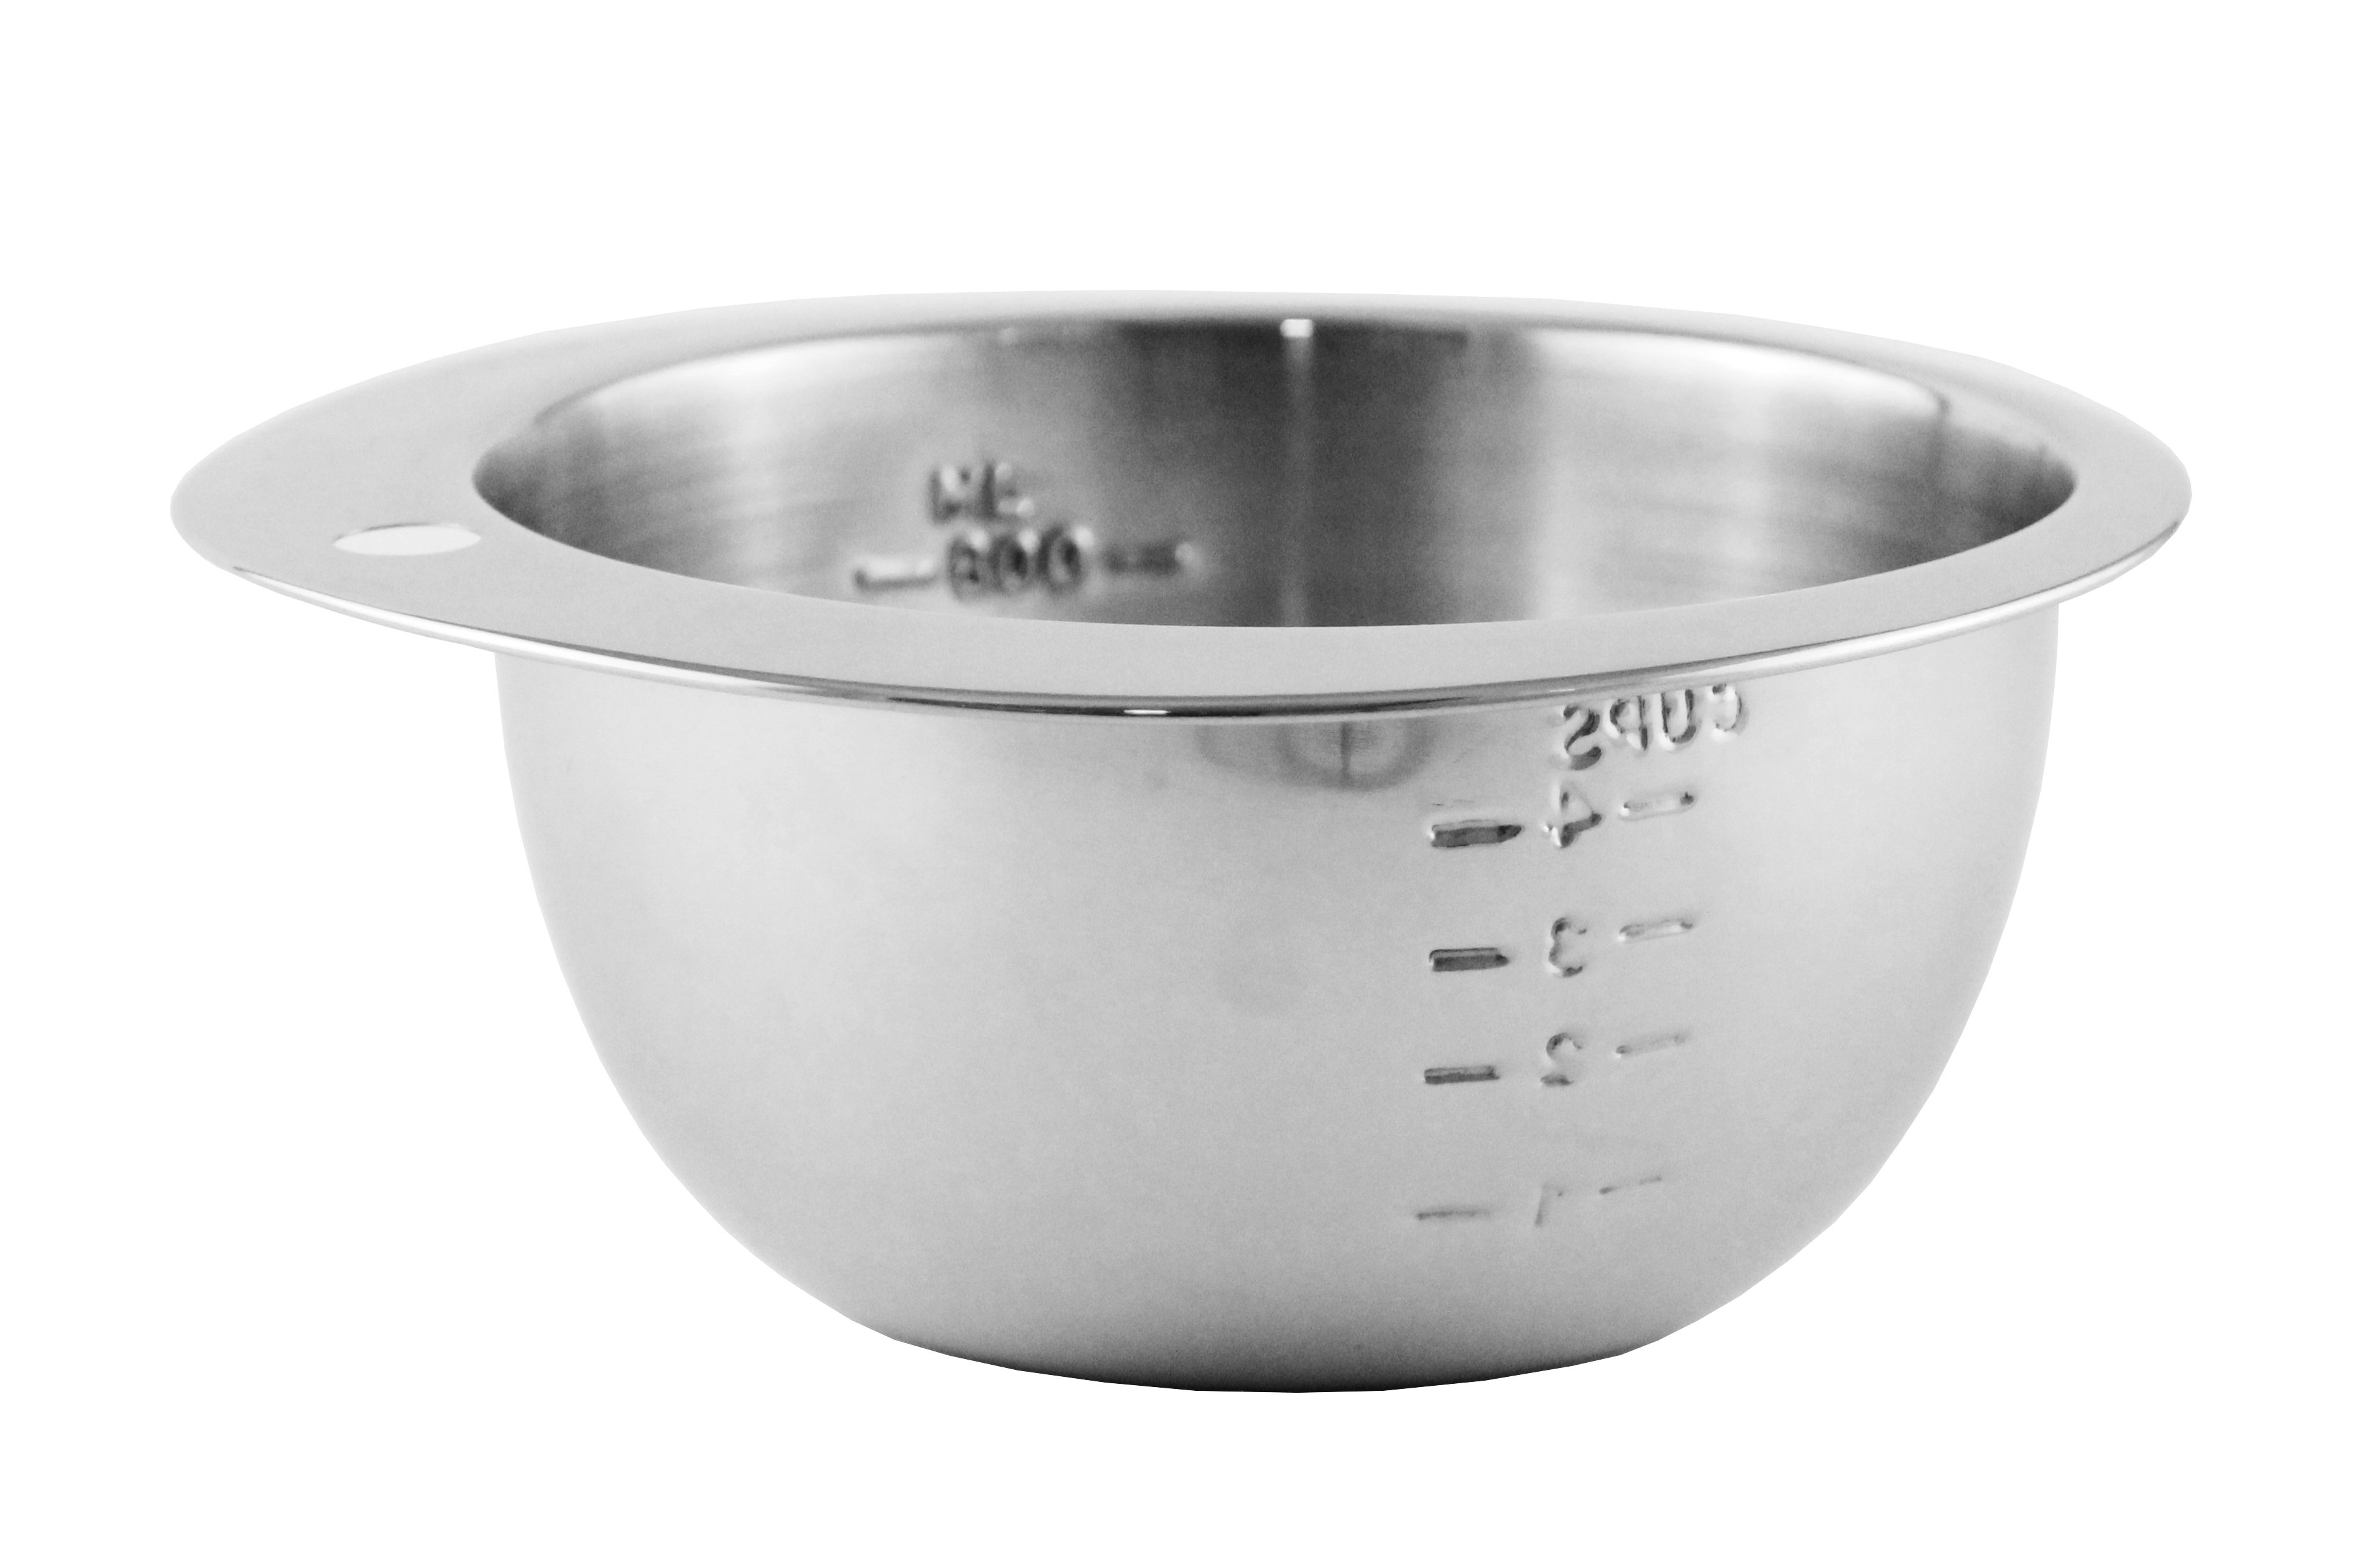 Mixing bowl in acciaio con scala graduata, 800ml